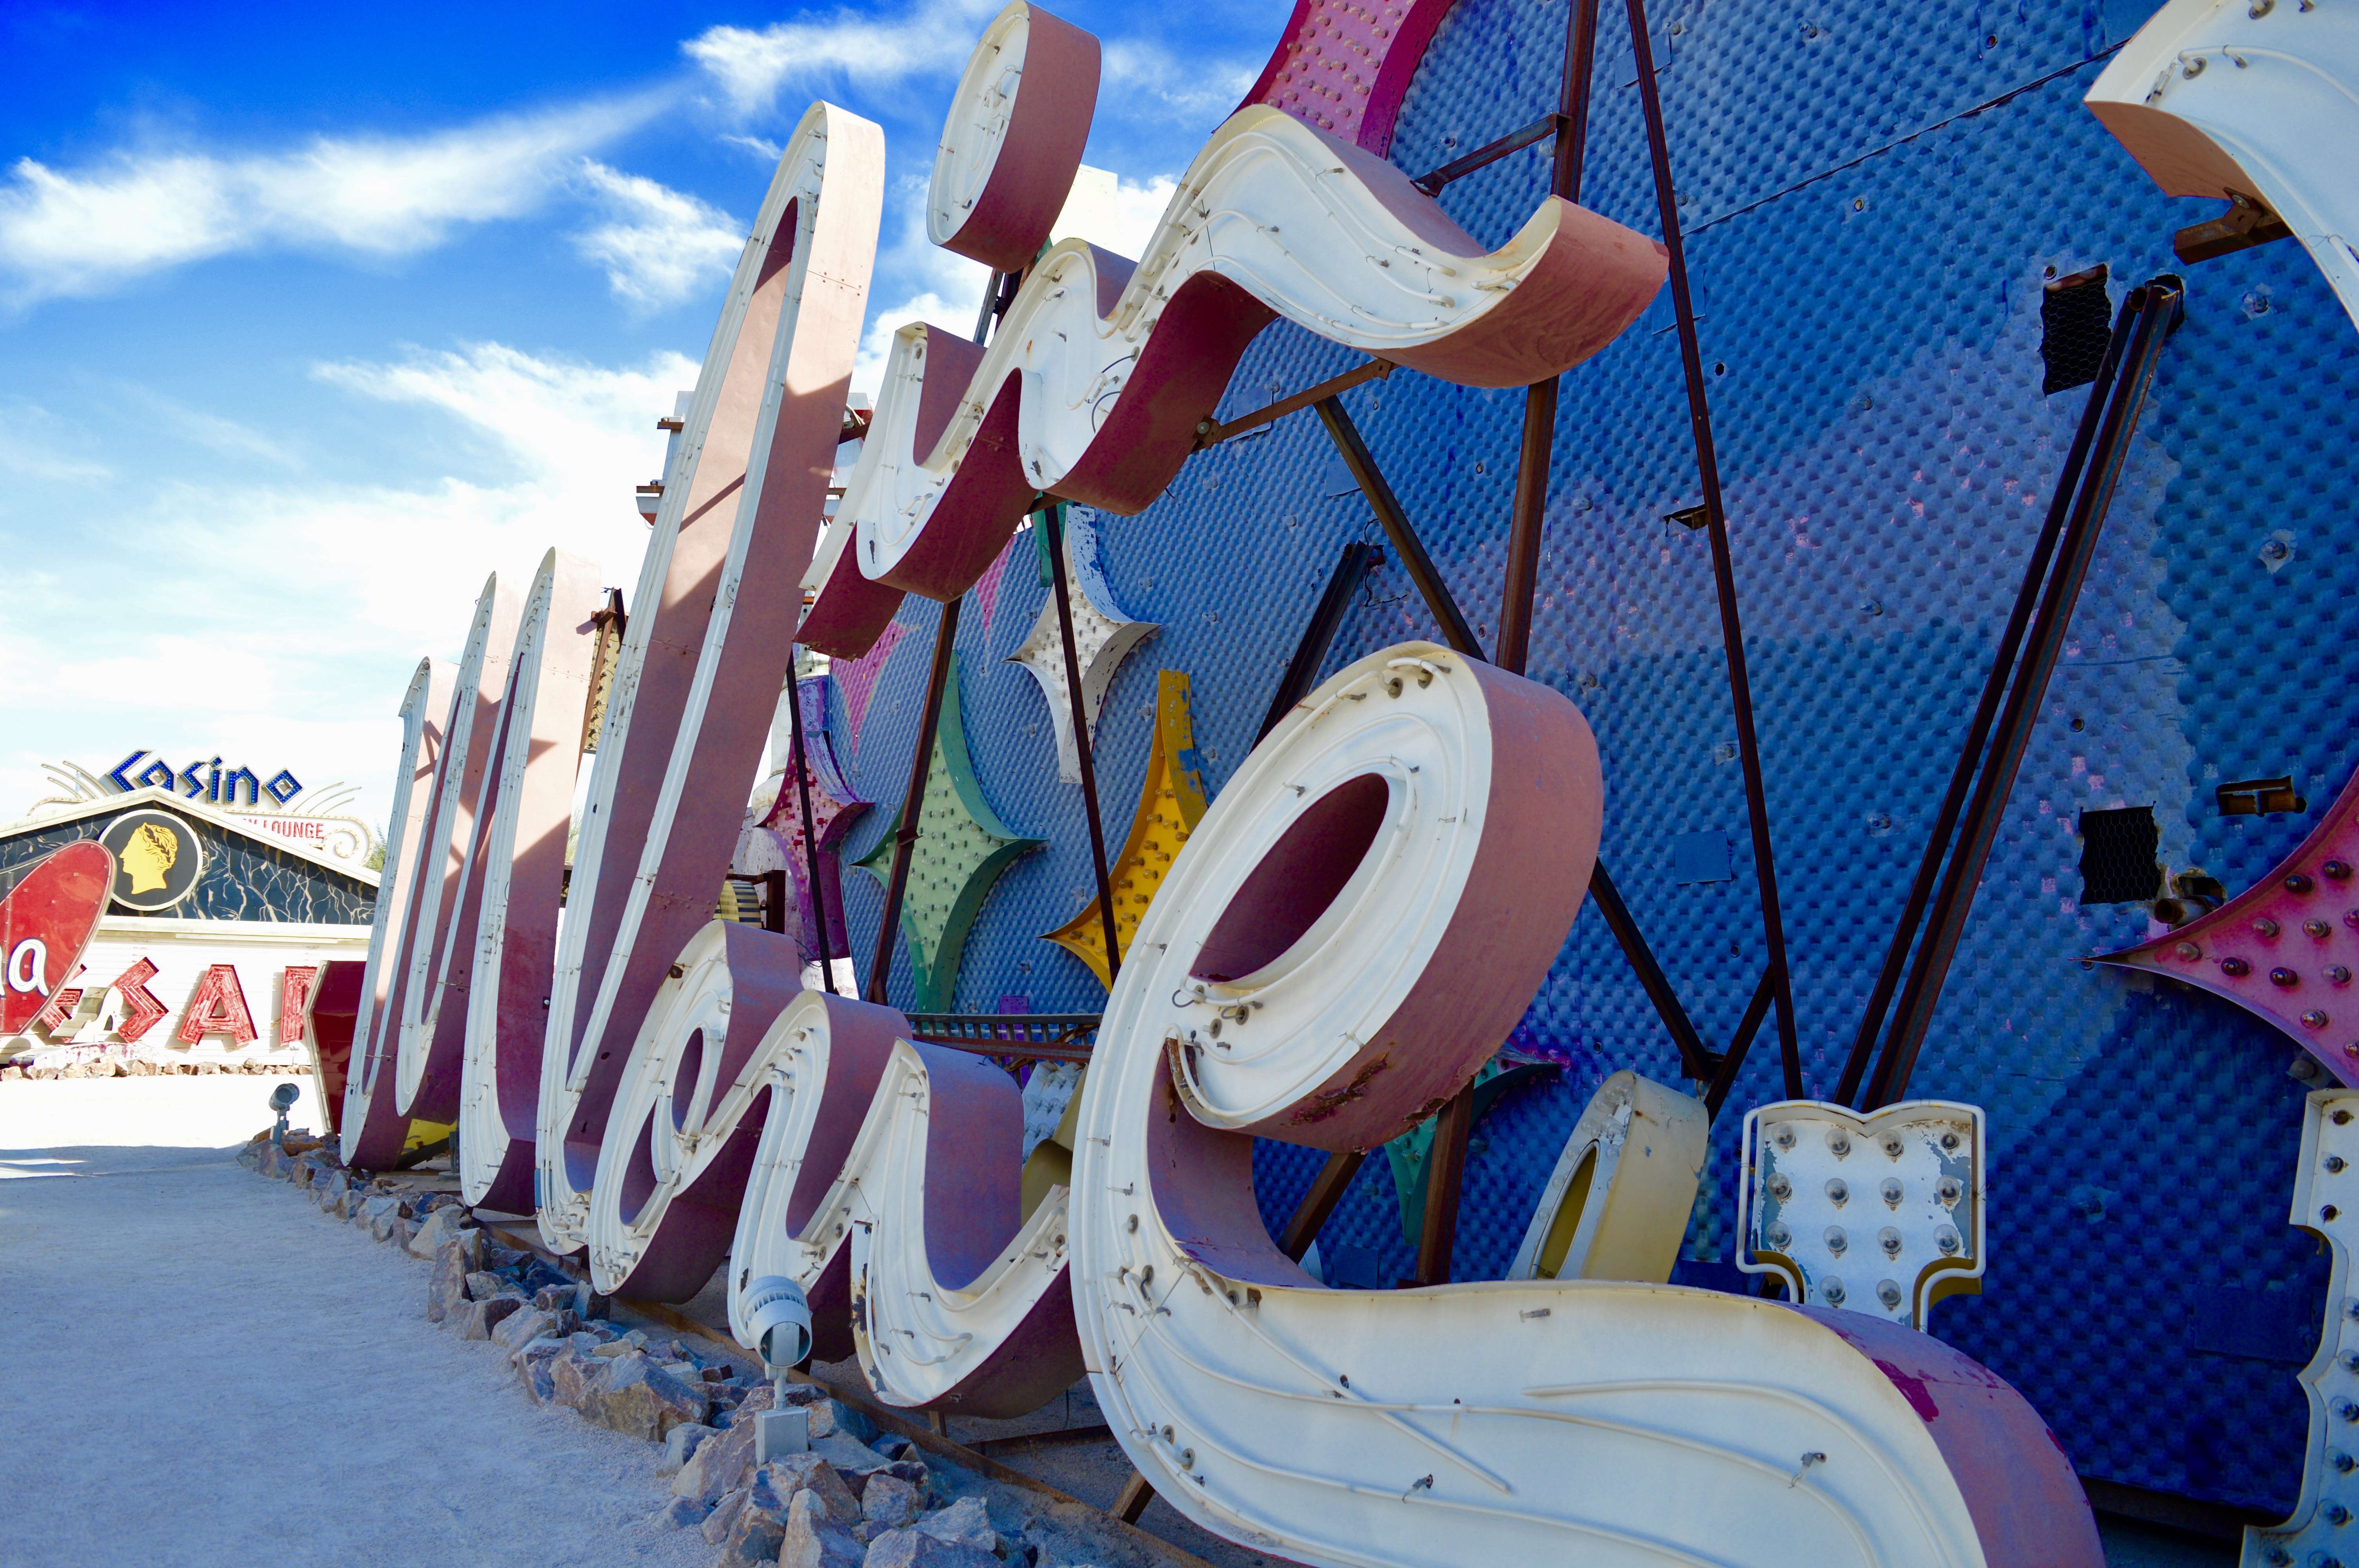 Moulin Rouge | The Neon Boneyard Museum | Las Vegas | What should I do in Las Vegas? | Travel tips for Las Vegas Nevada | Travel Blog | Elle Blonde Luxury Lifestyle Destination Blog